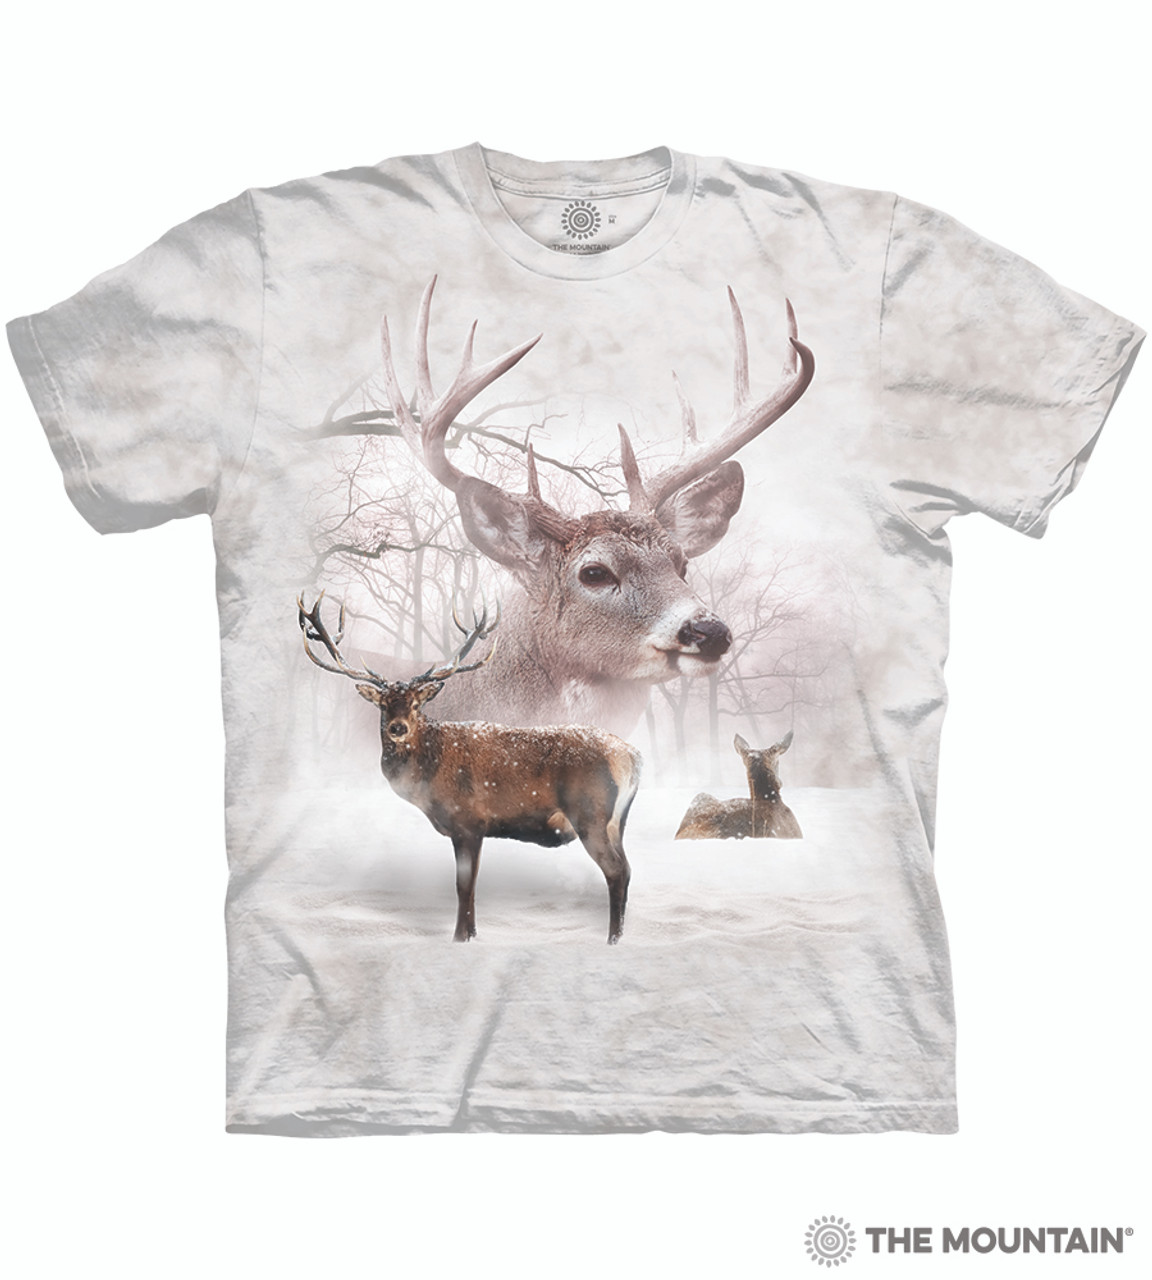  The Mountain - Wintertime Deer - 